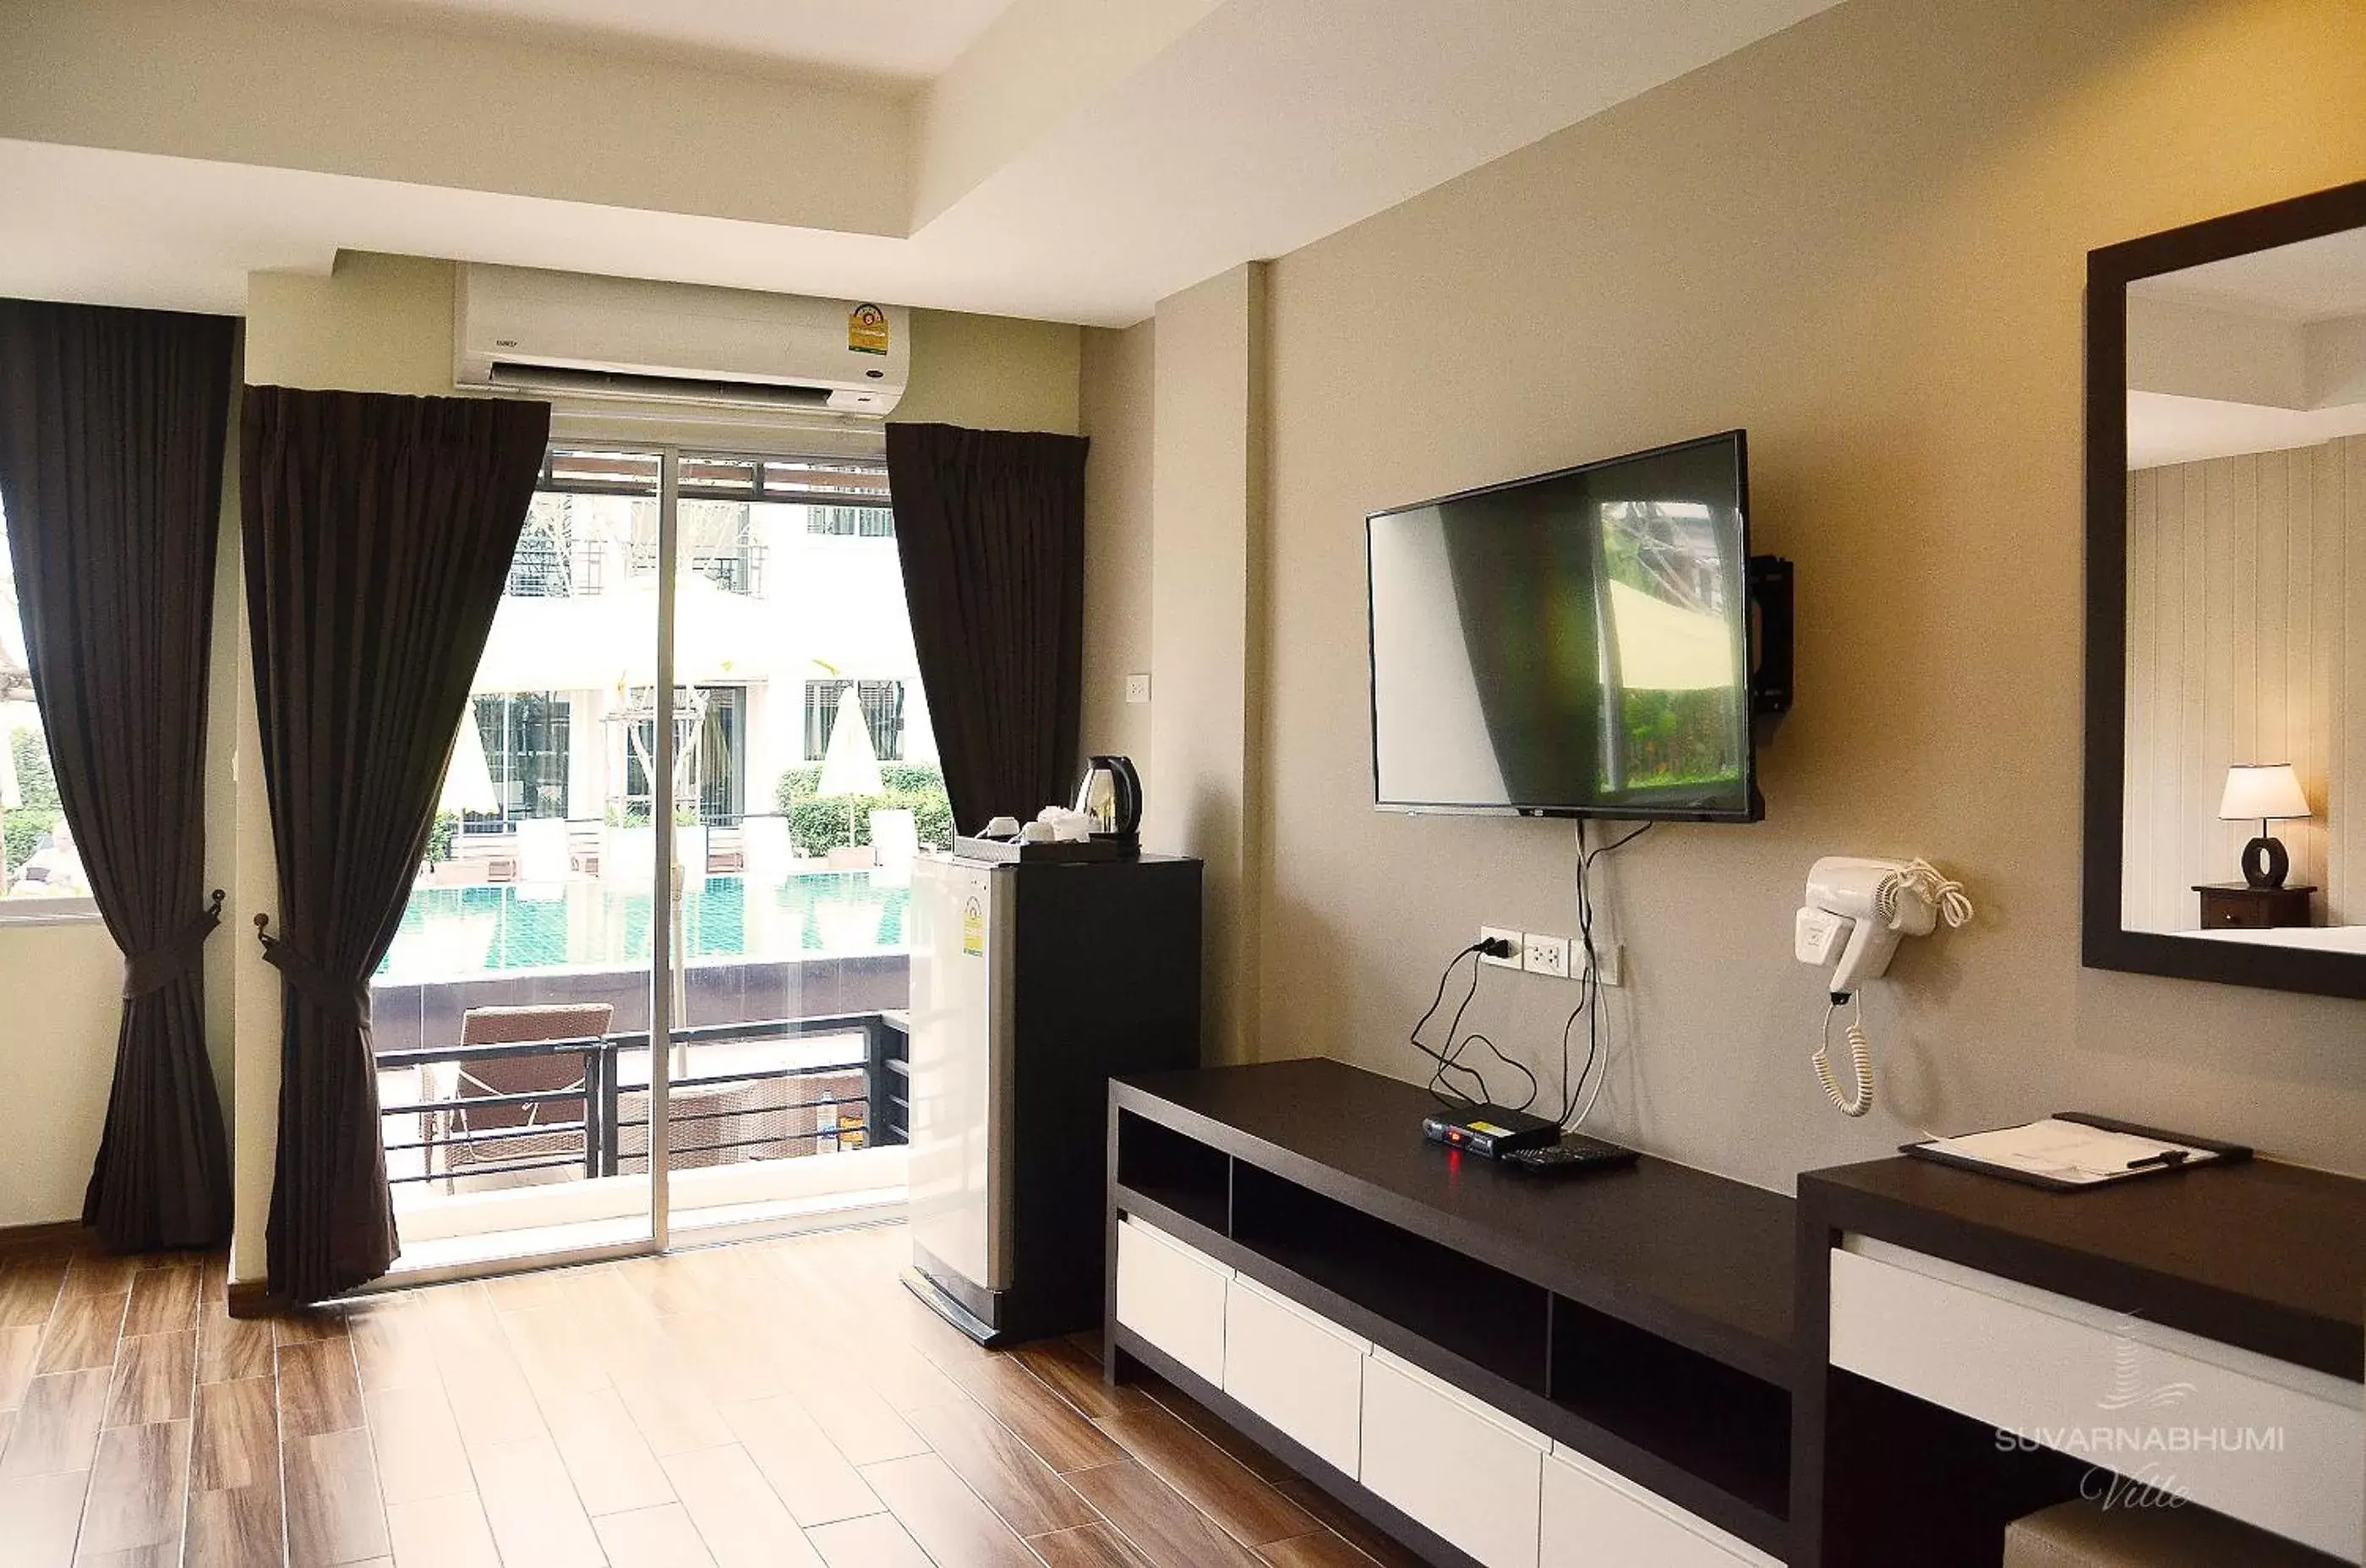 Bedroom, TV/Entertainment Center in Suvarnabhumi Ville Airport Hotel